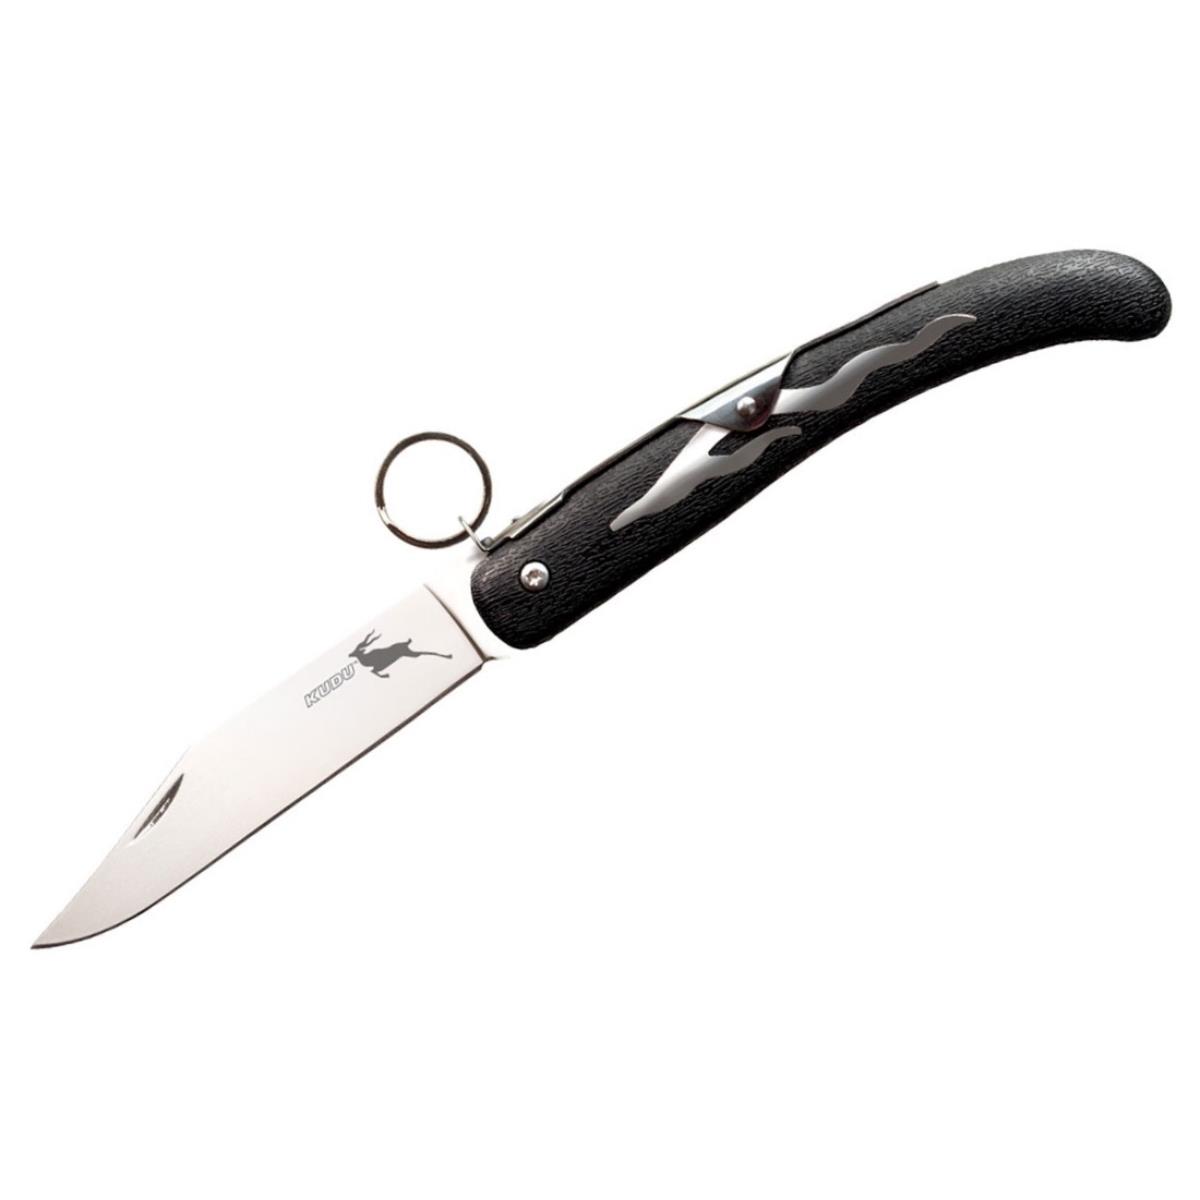 Нож 20KK Kudu складной, рук-ть пластик, клинок 5Cr13MoV Cold Steel складной туристический табурет для рыбалки bradex